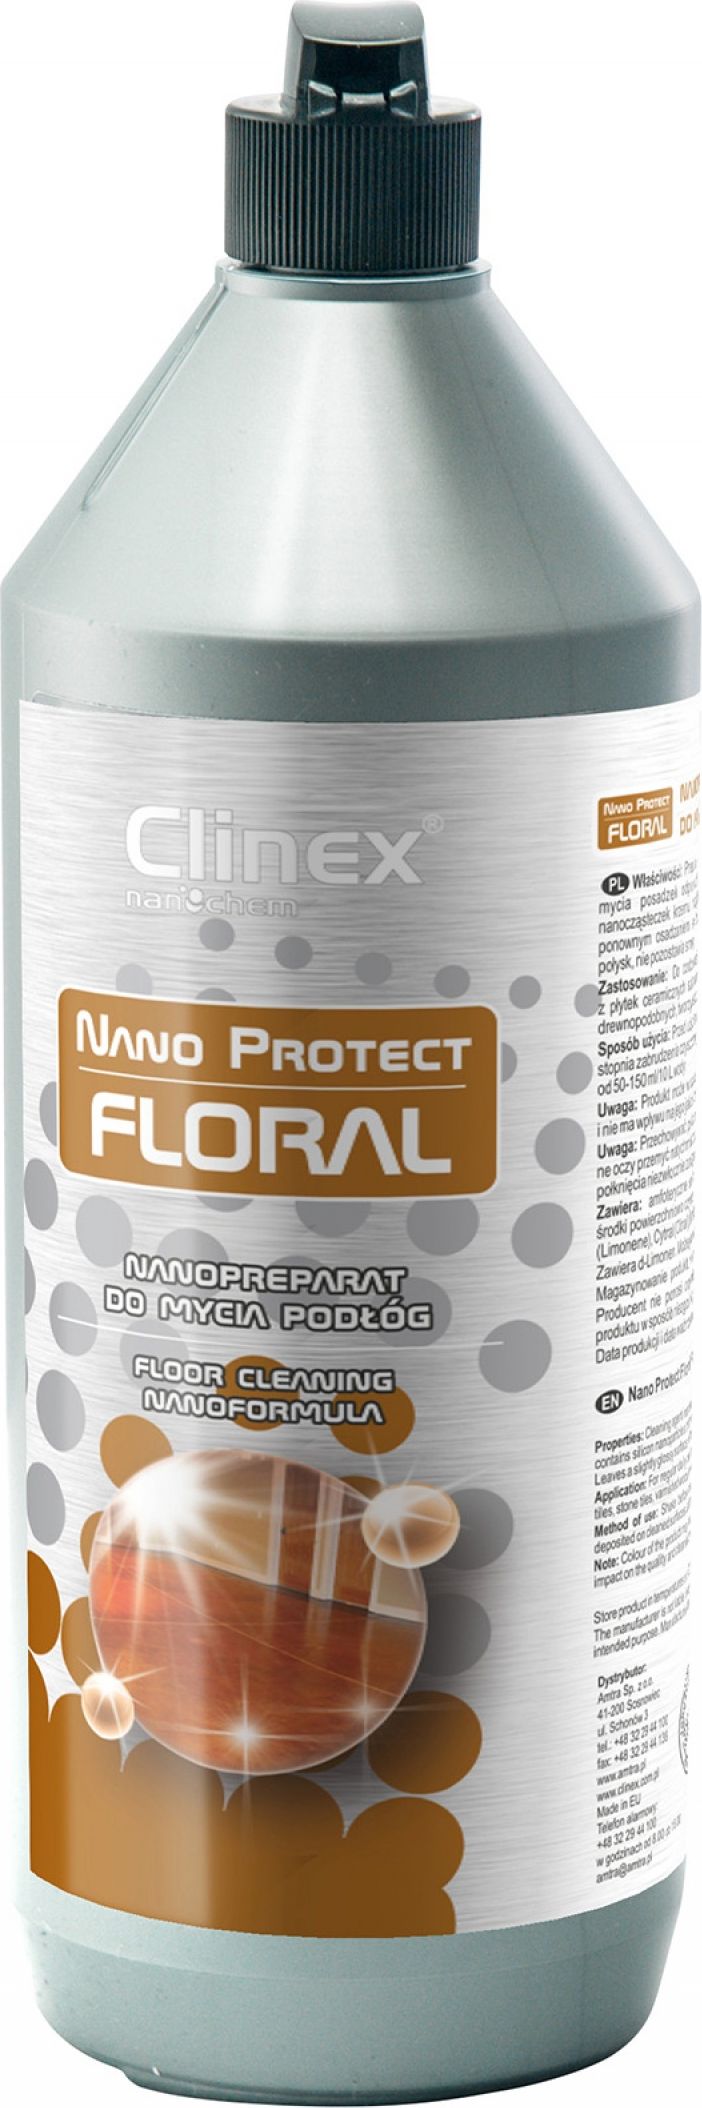 Detergent pentru pardoseli Clinex Nano Protect Flora, cu particule de silicon, 1L